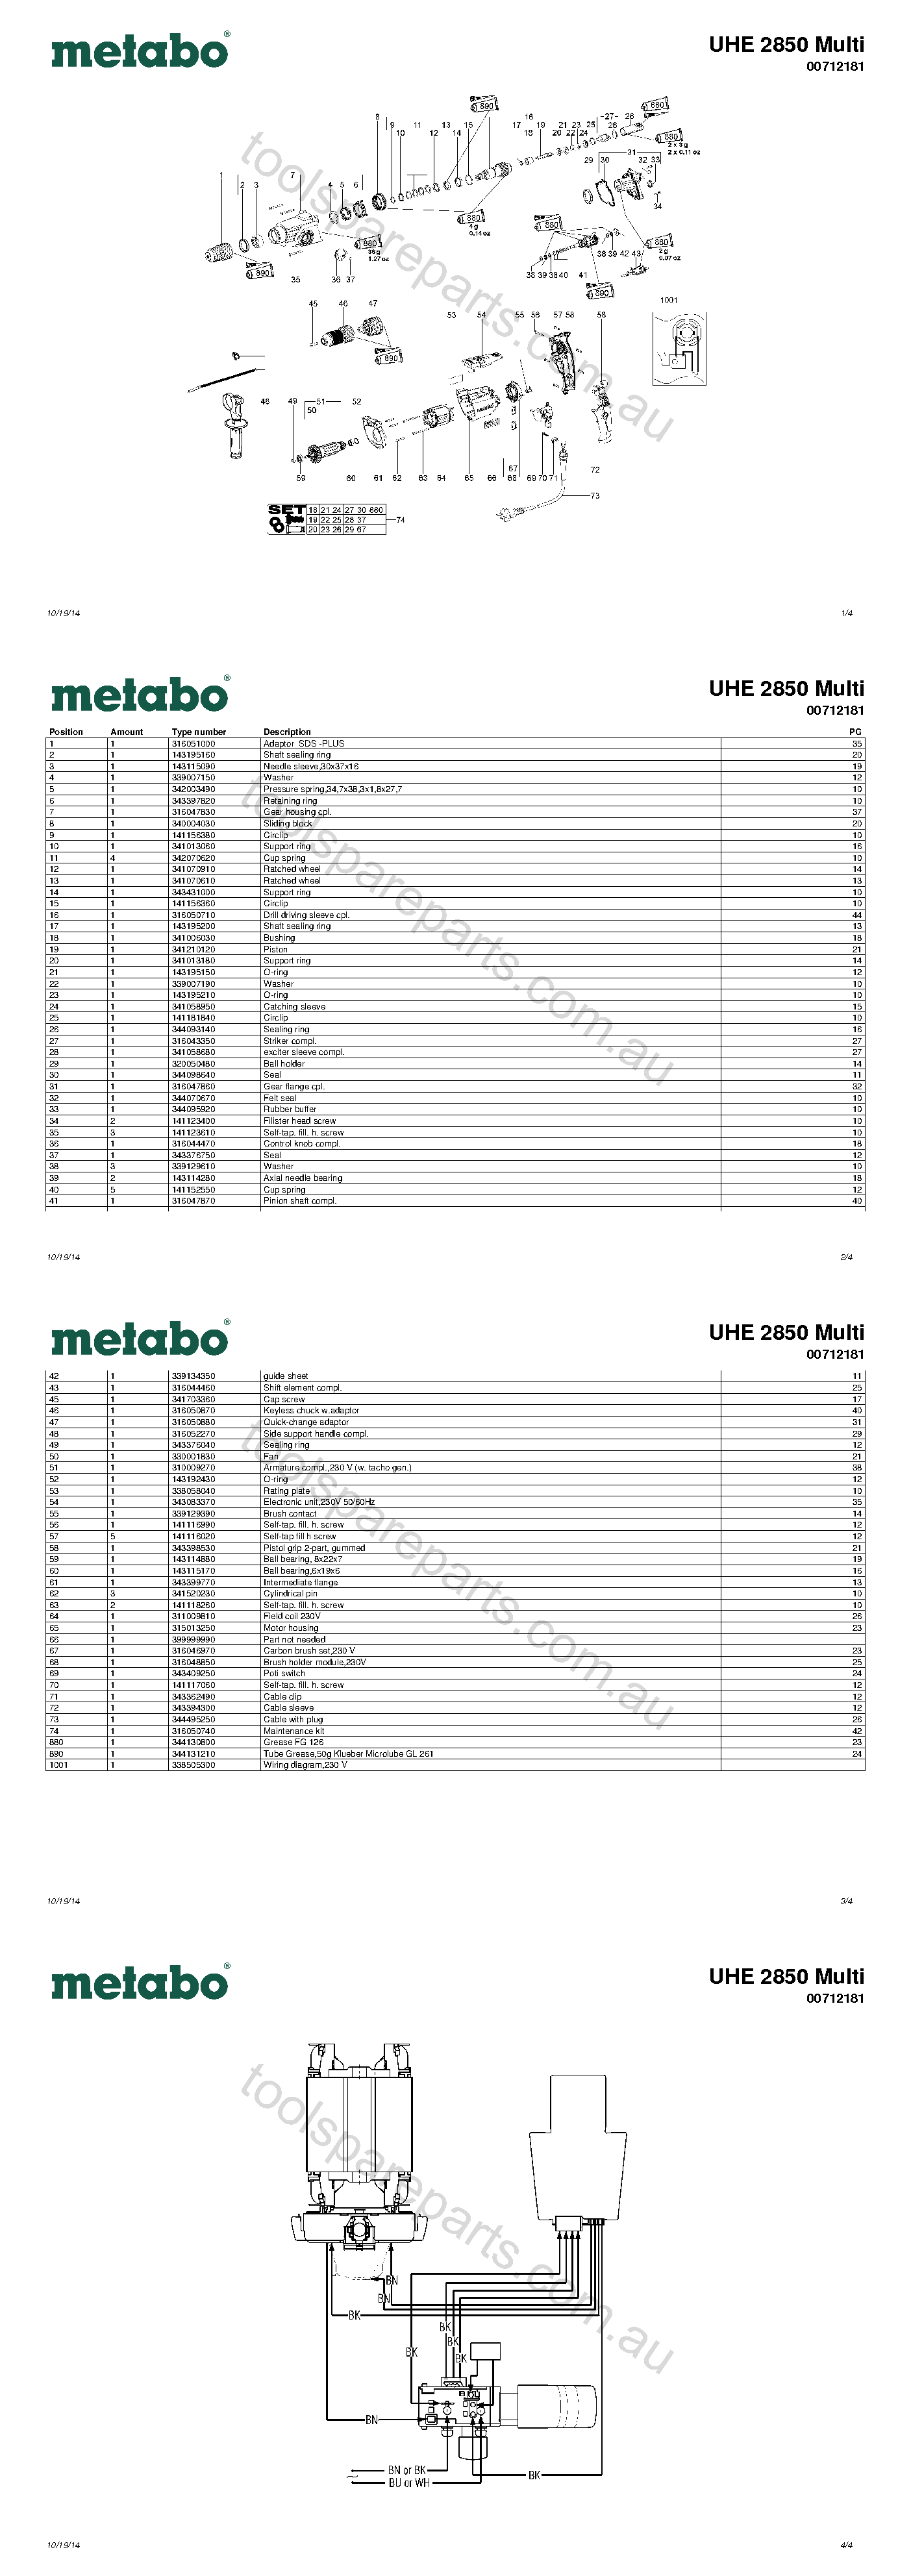 Metabo UHE 2850 Multi 00712181  Diagram 1